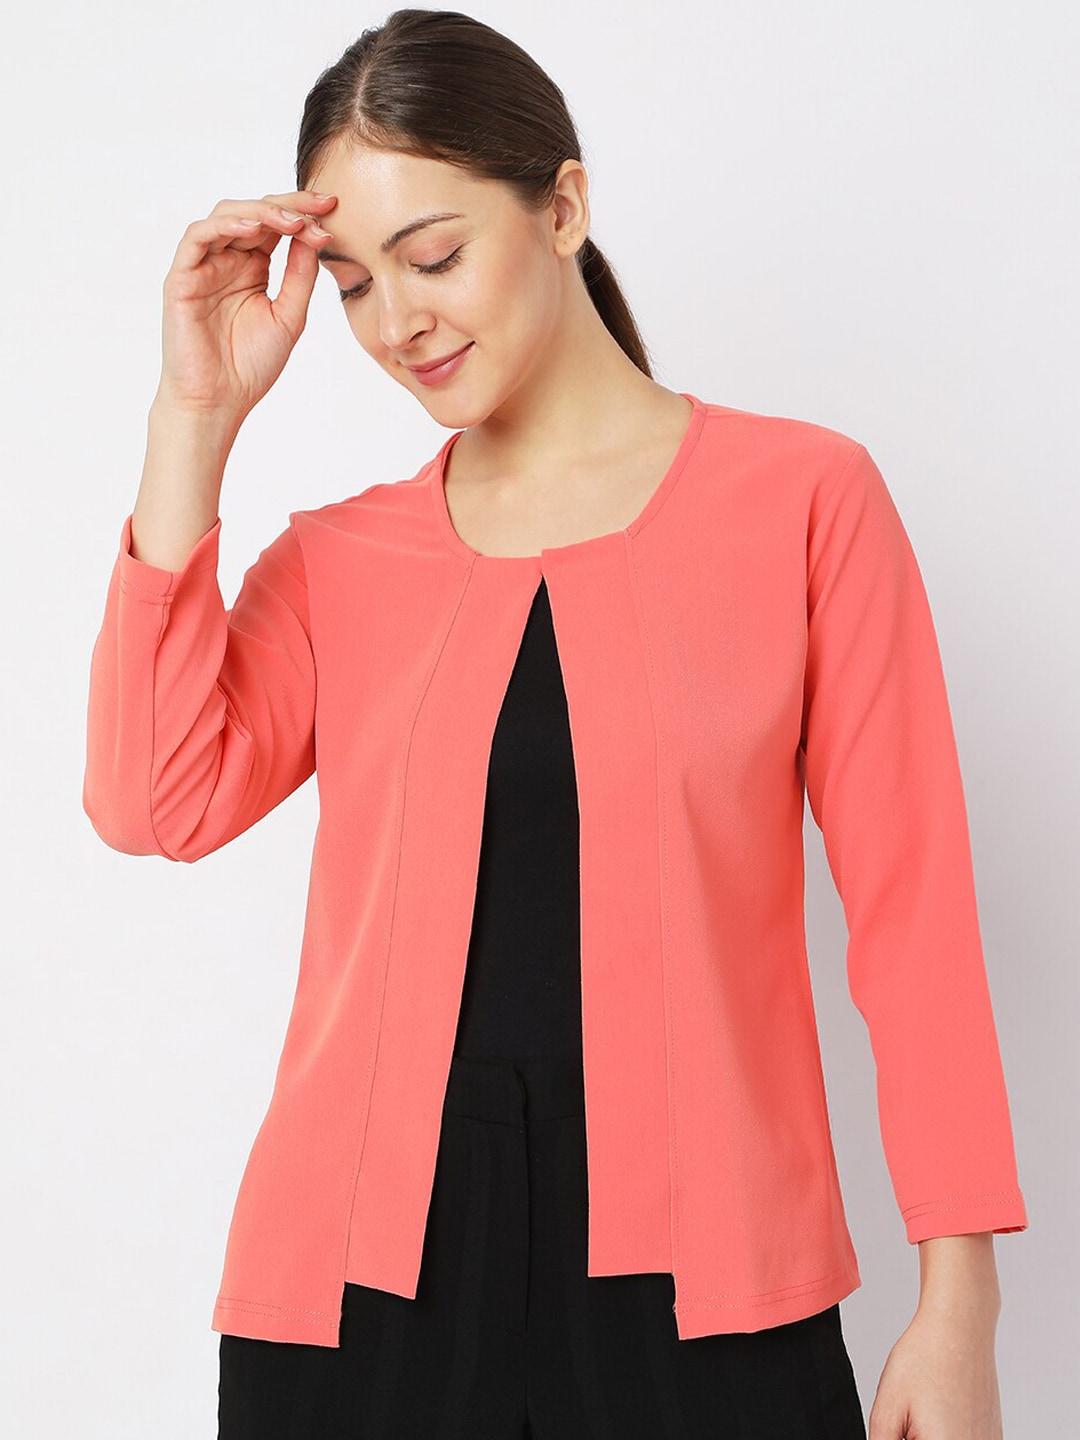 smarty pants women pink lightweight tailored jacket